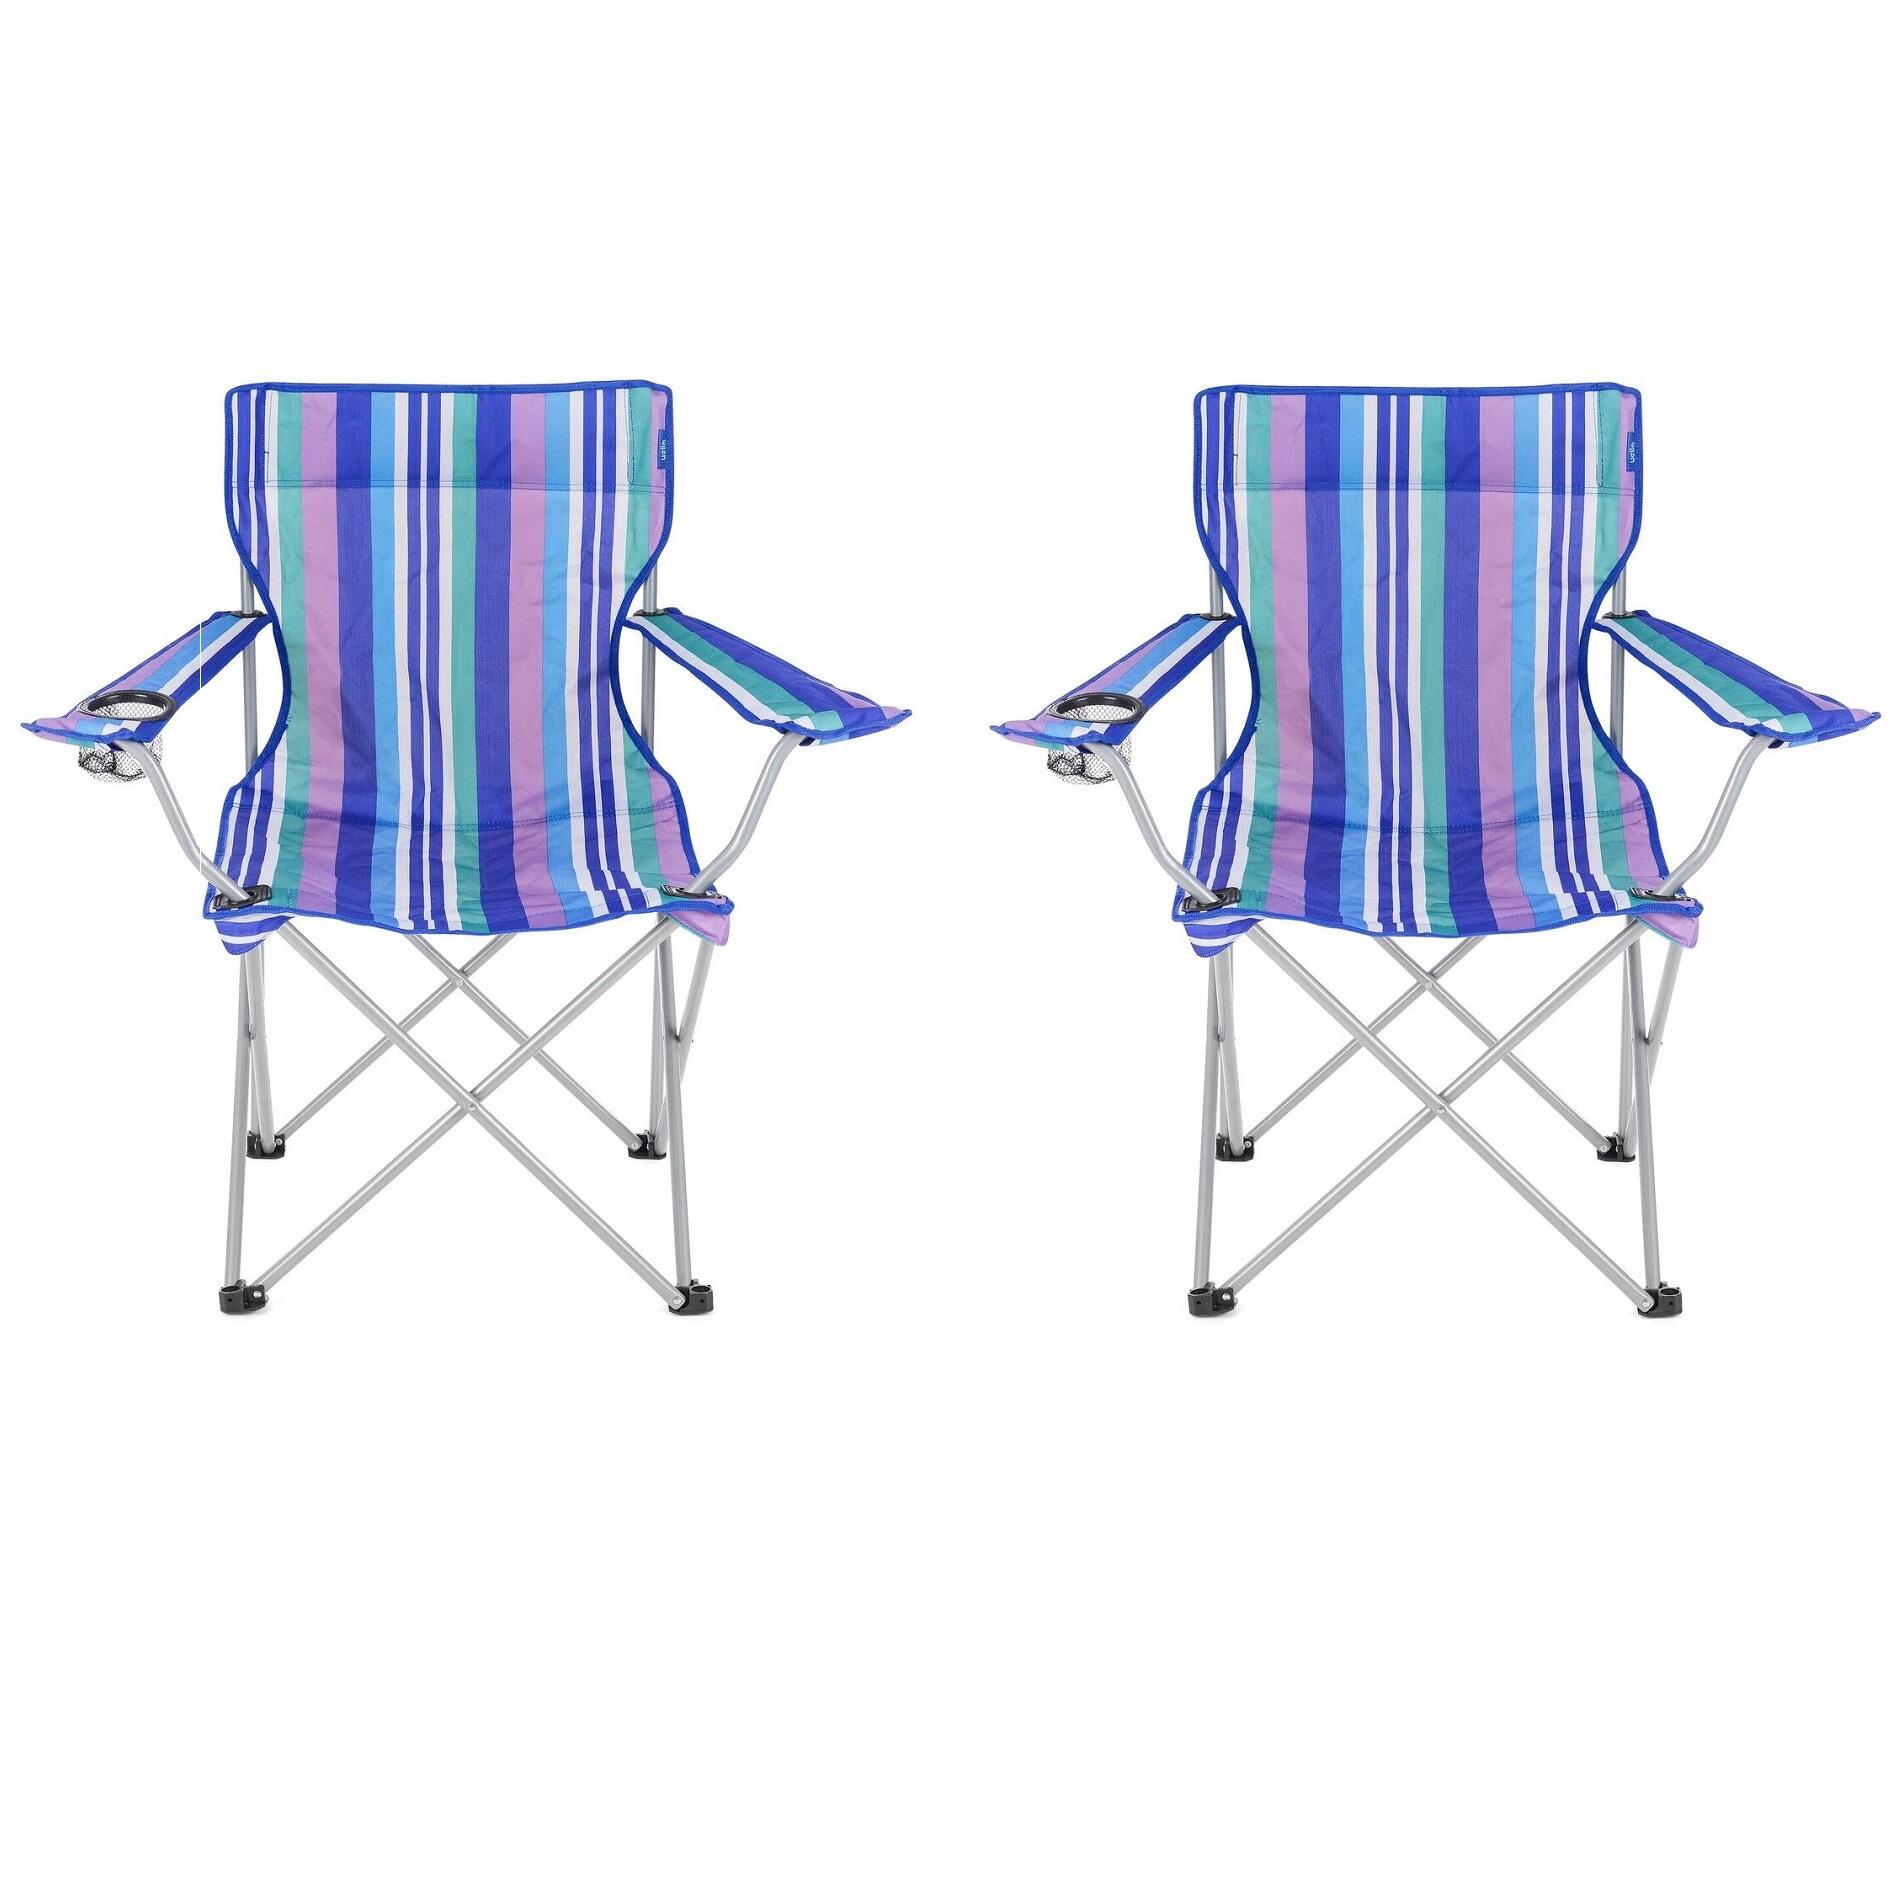 YELLO 2 Yello Folding Beach Chairs For Camping, Fishing Or Beach - Blue stripes